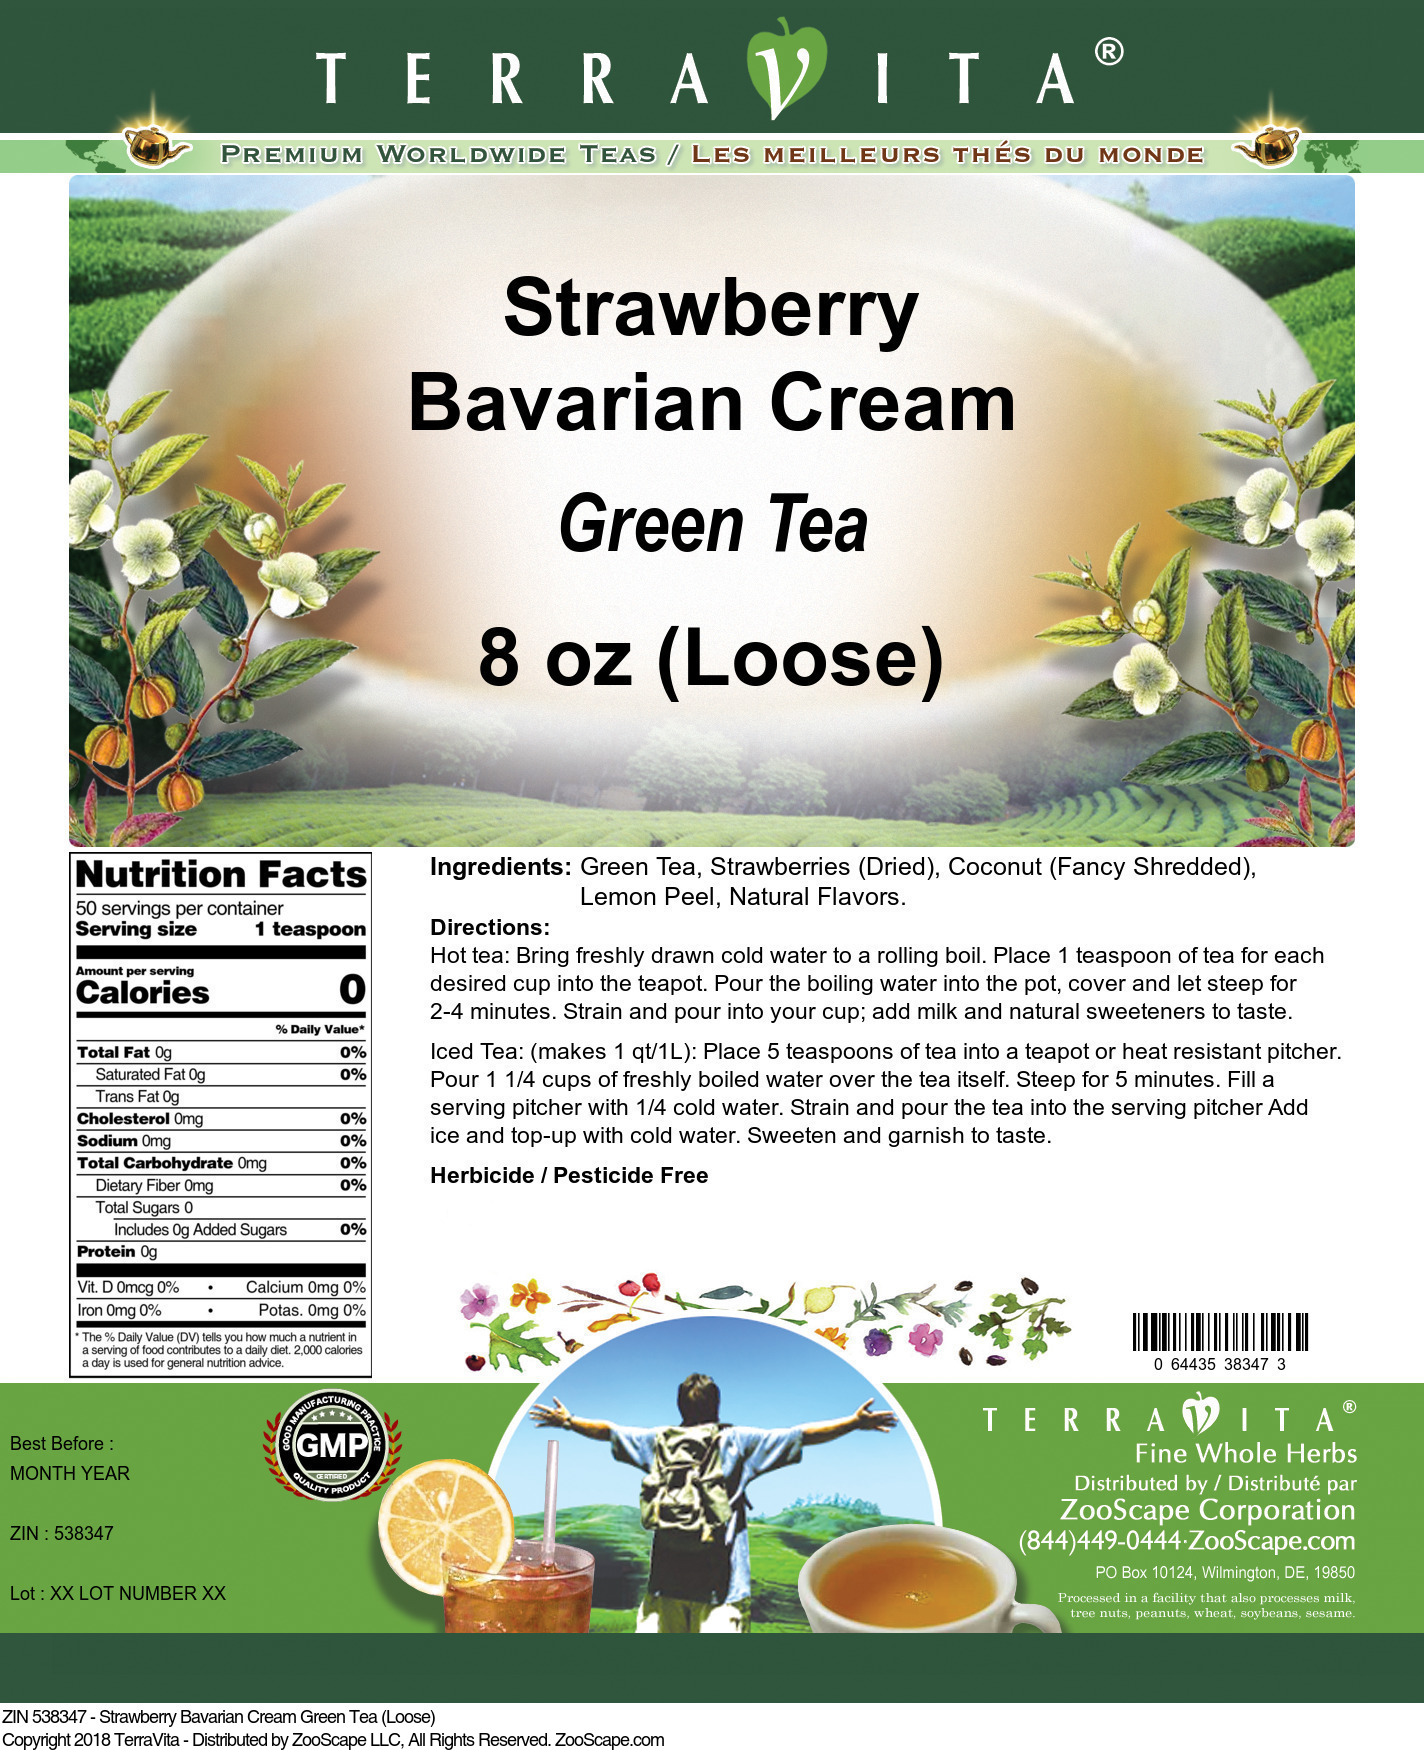 Strawberry Bavarian Cream Green Tea (Loose) - Label